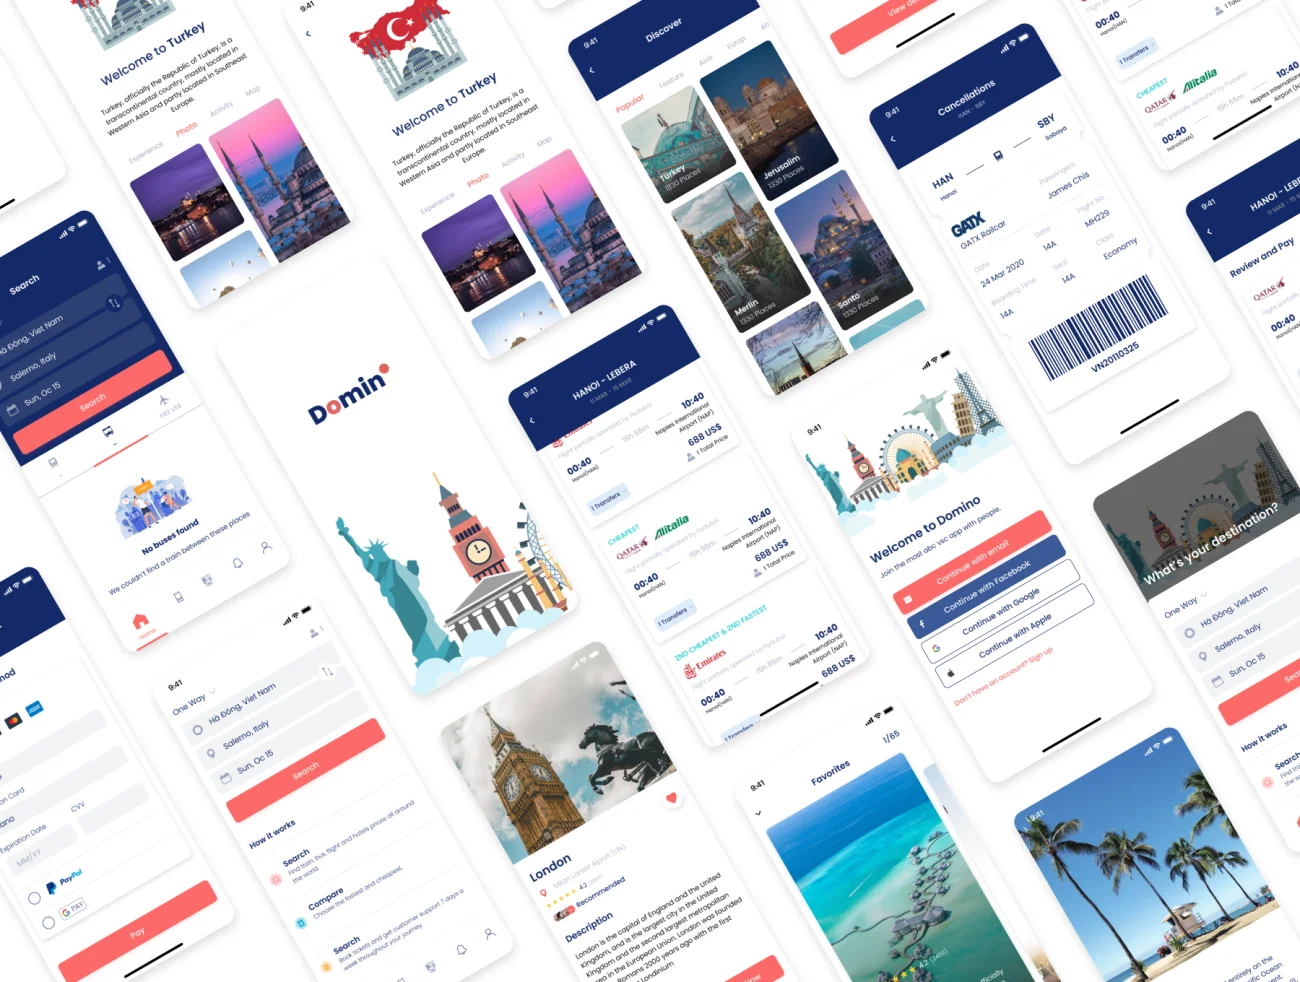 domino 城市旅行航班线路推荐app UI 设计套件-UI/UX-到位啦UI